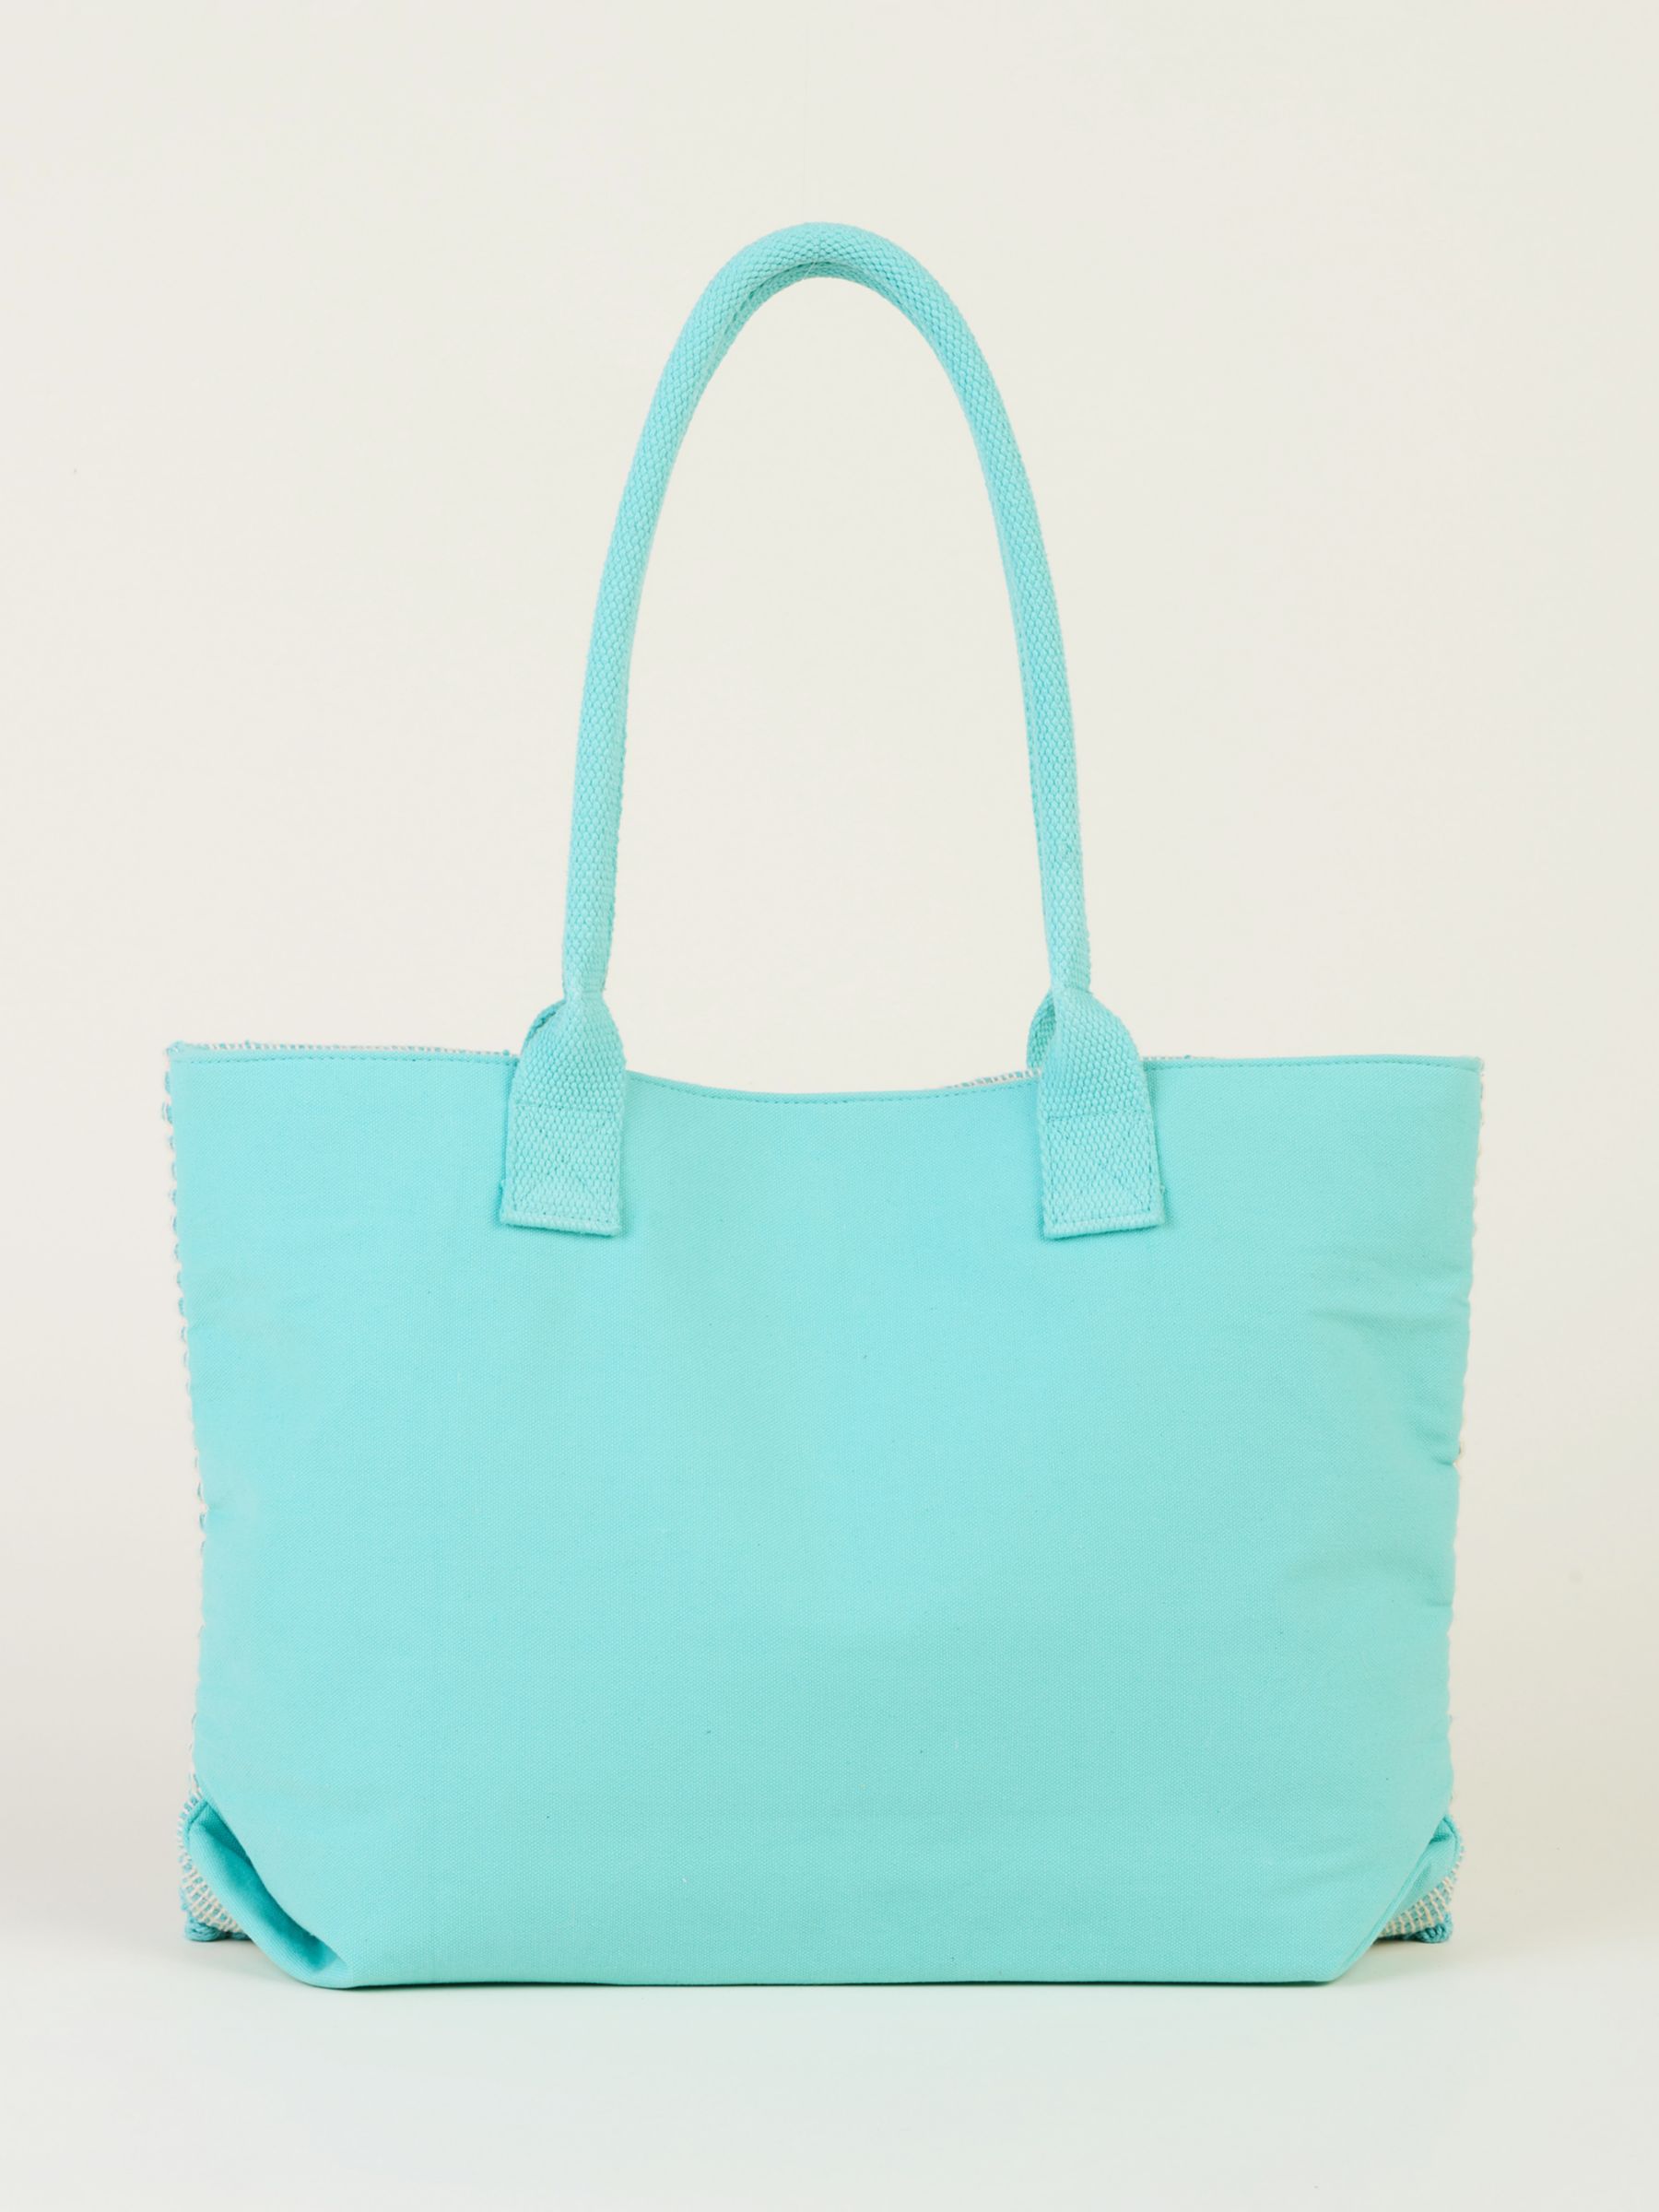 Brakeburn Nautica Tufted Beach Bag, Turquoise/White, One Size